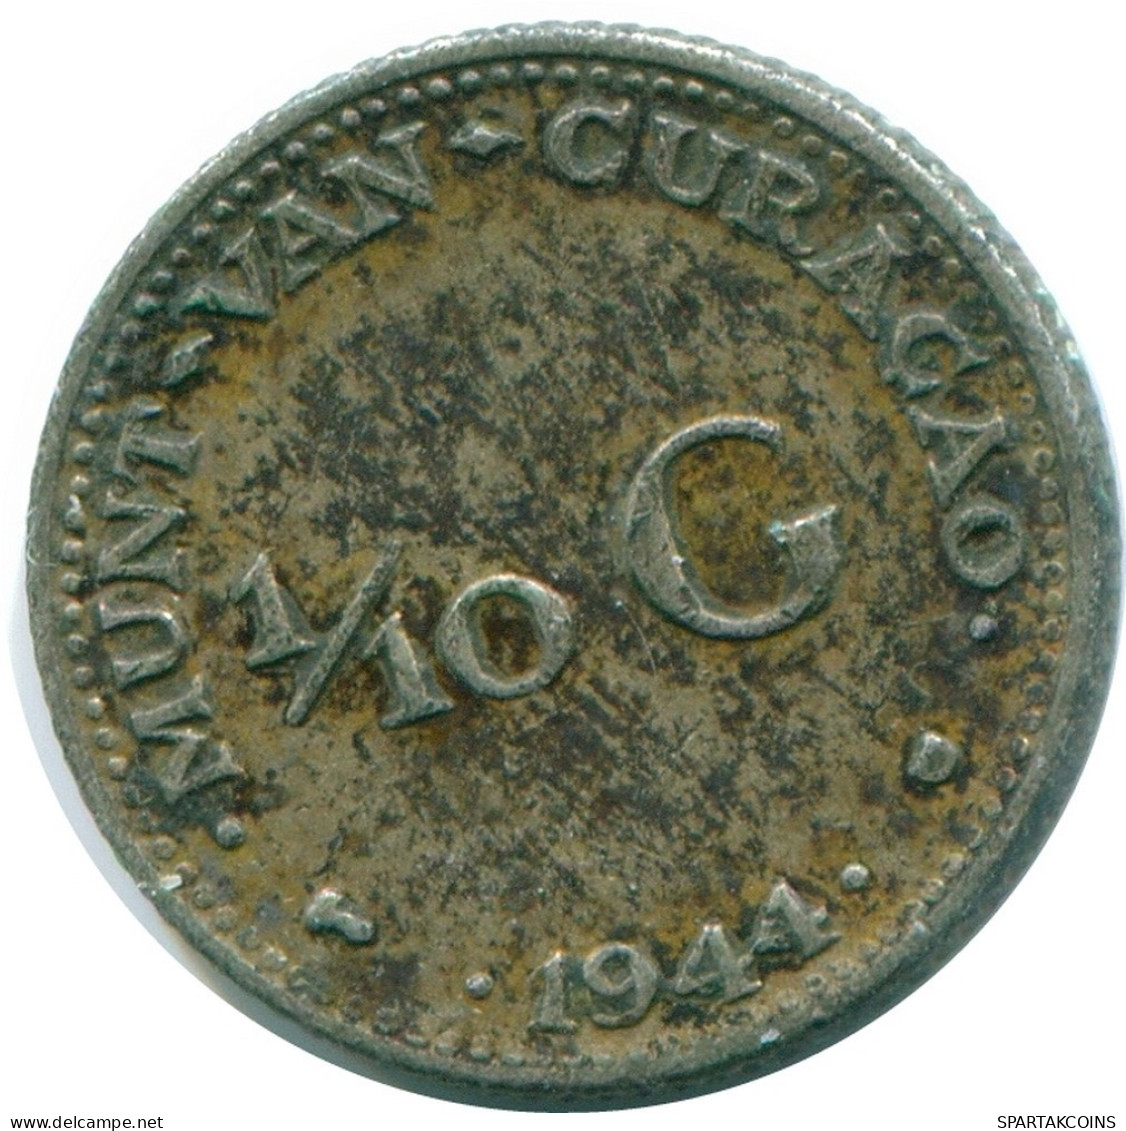 1/10 GULDEN 1944 CURACAO Netherlands SILVER Colonial Coin #NL11765.3.U.A - Curaçao